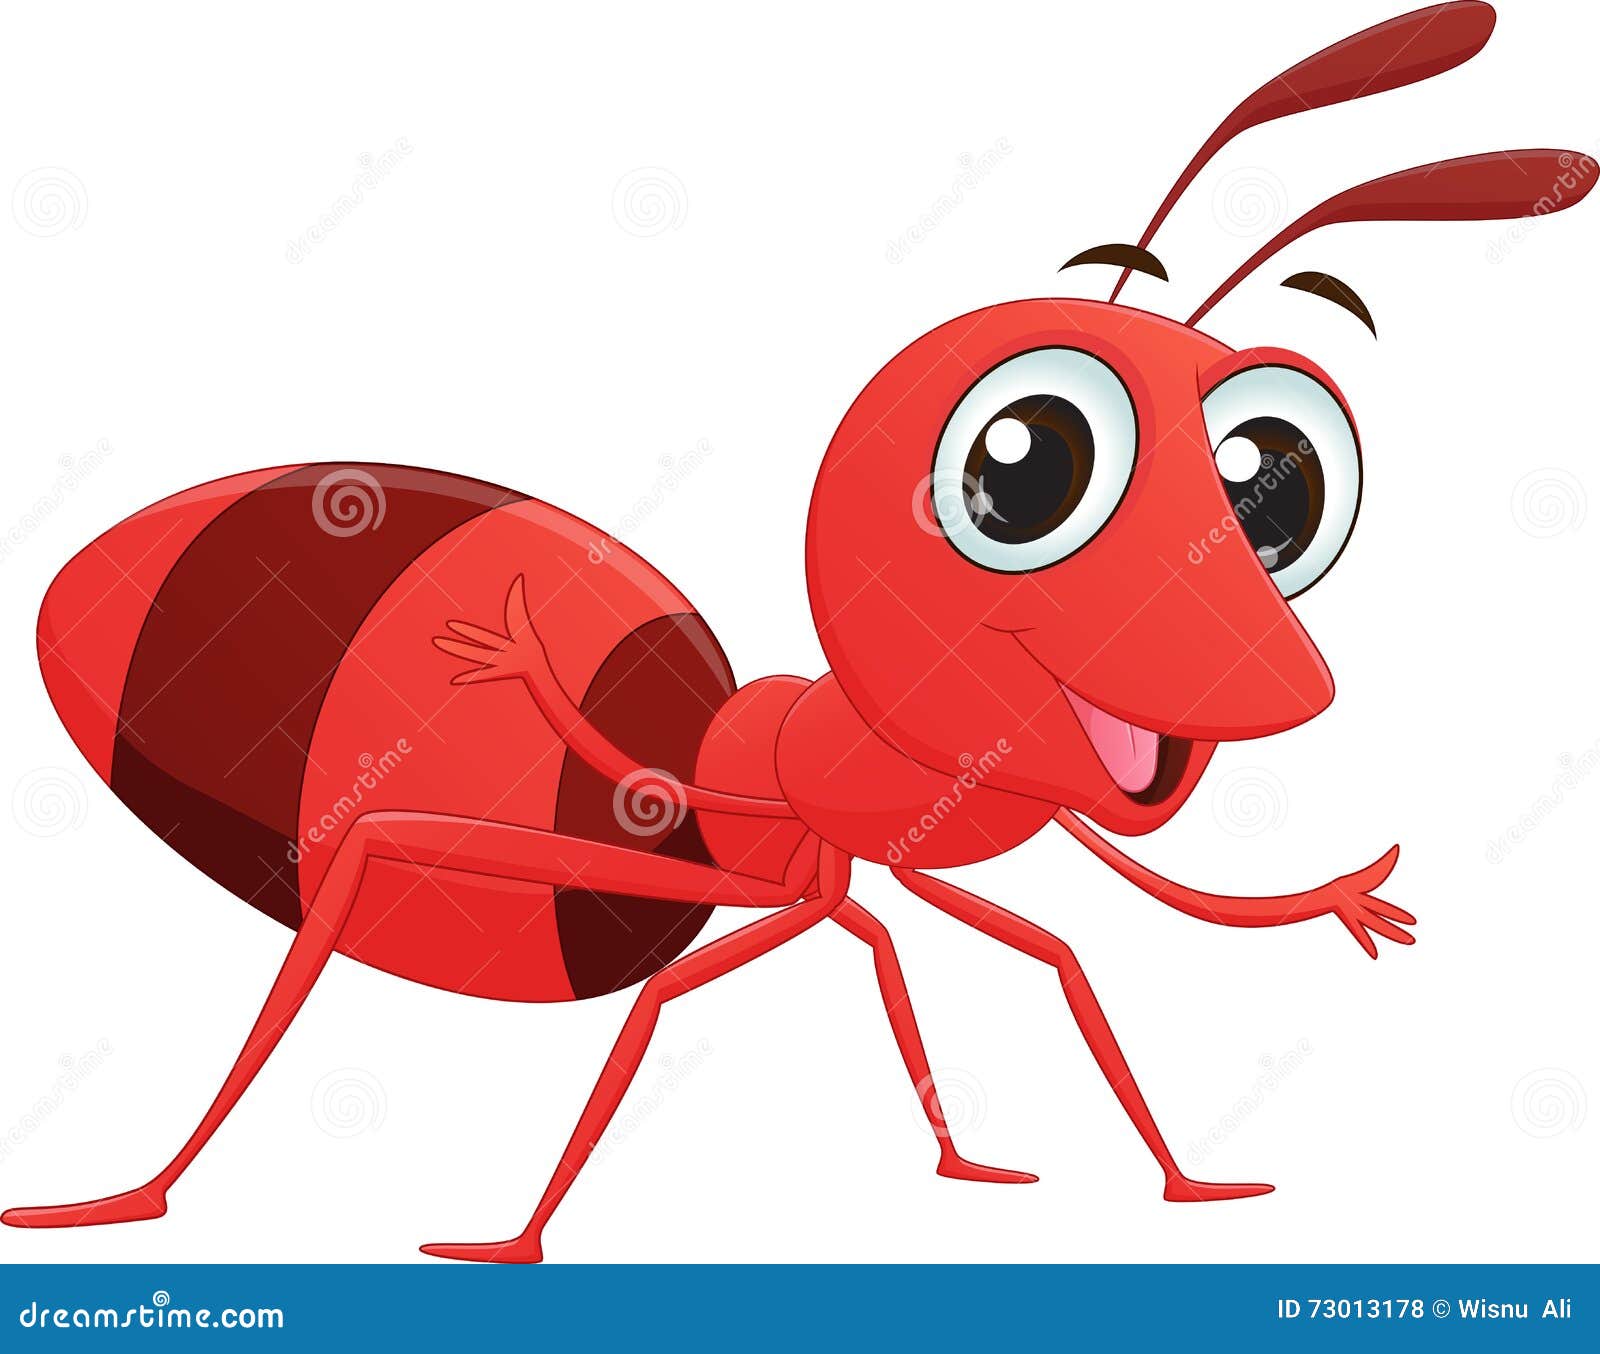 Cute ant cartoon stock vector. Illustration of cartoon - 73013178